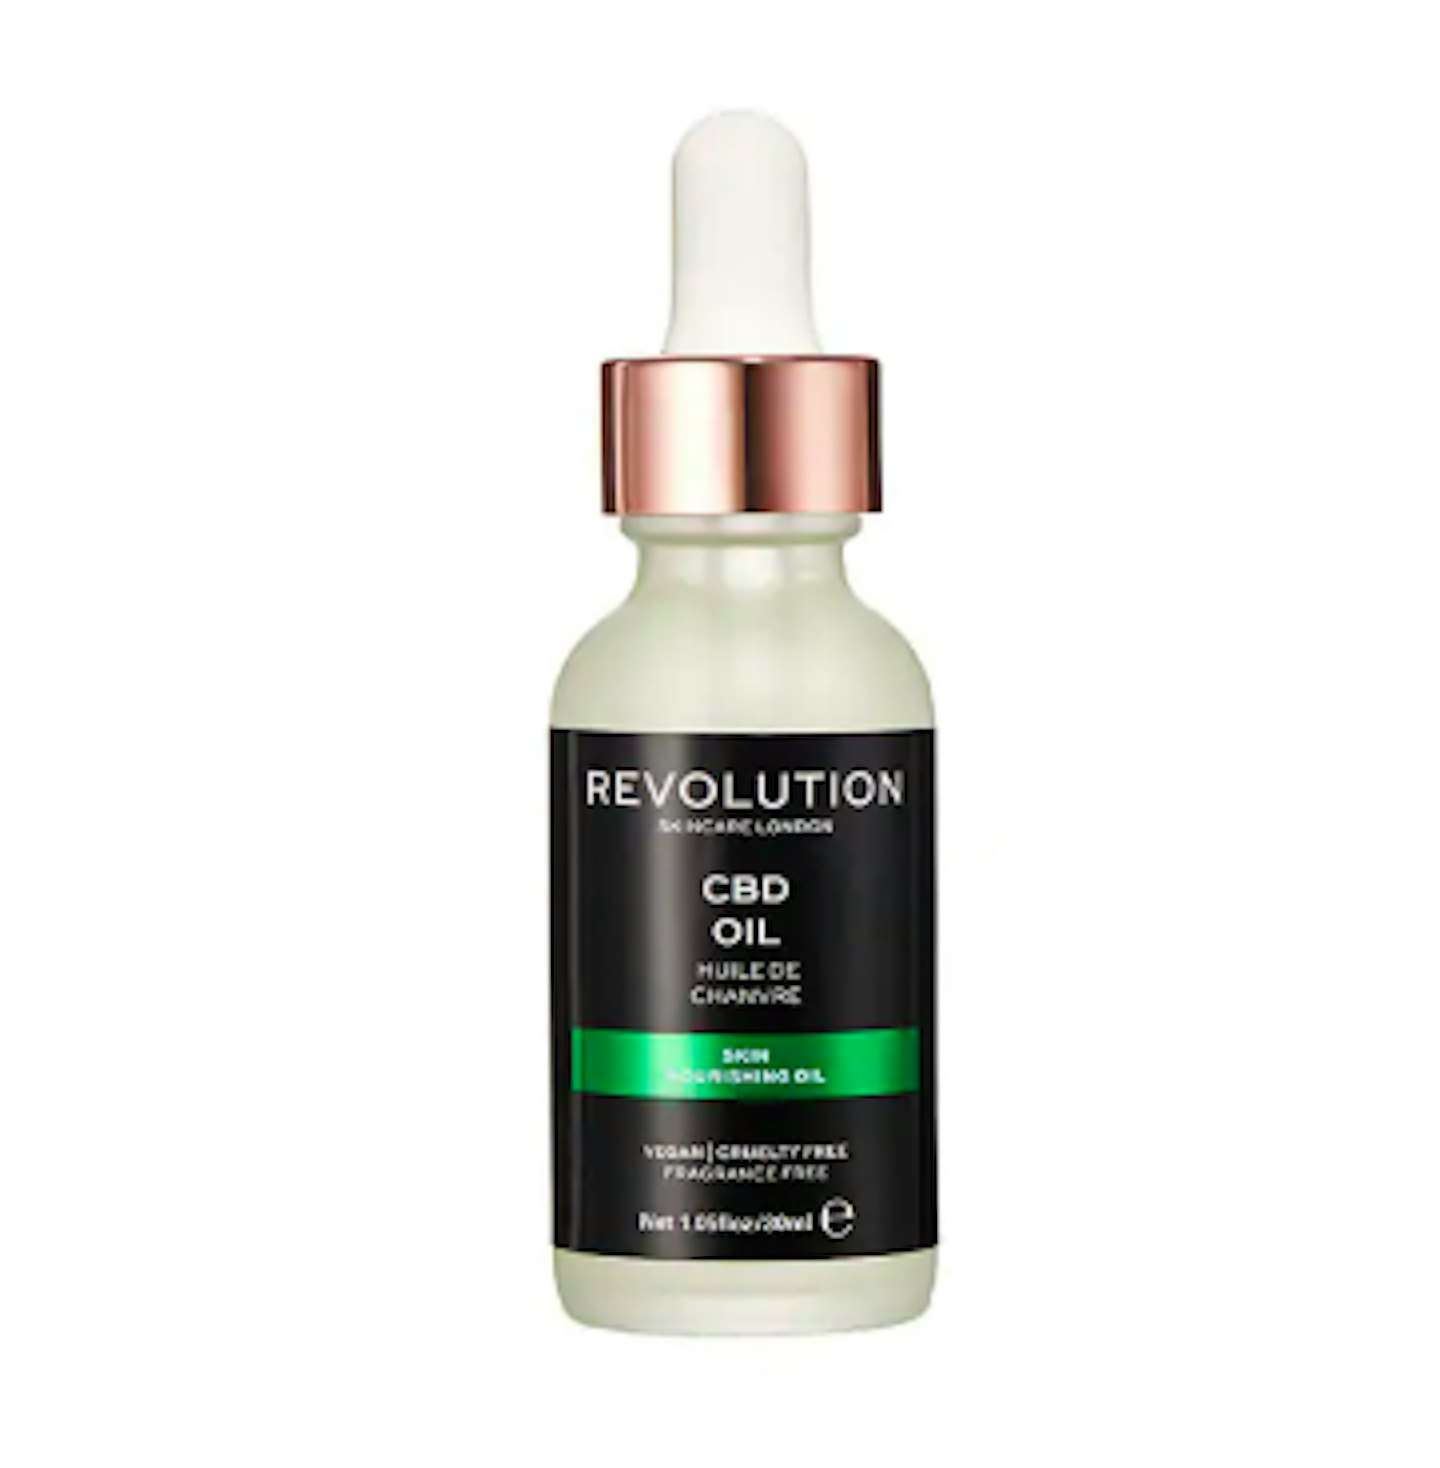 Revolution Skincare Skin Nourishing CBD Oil